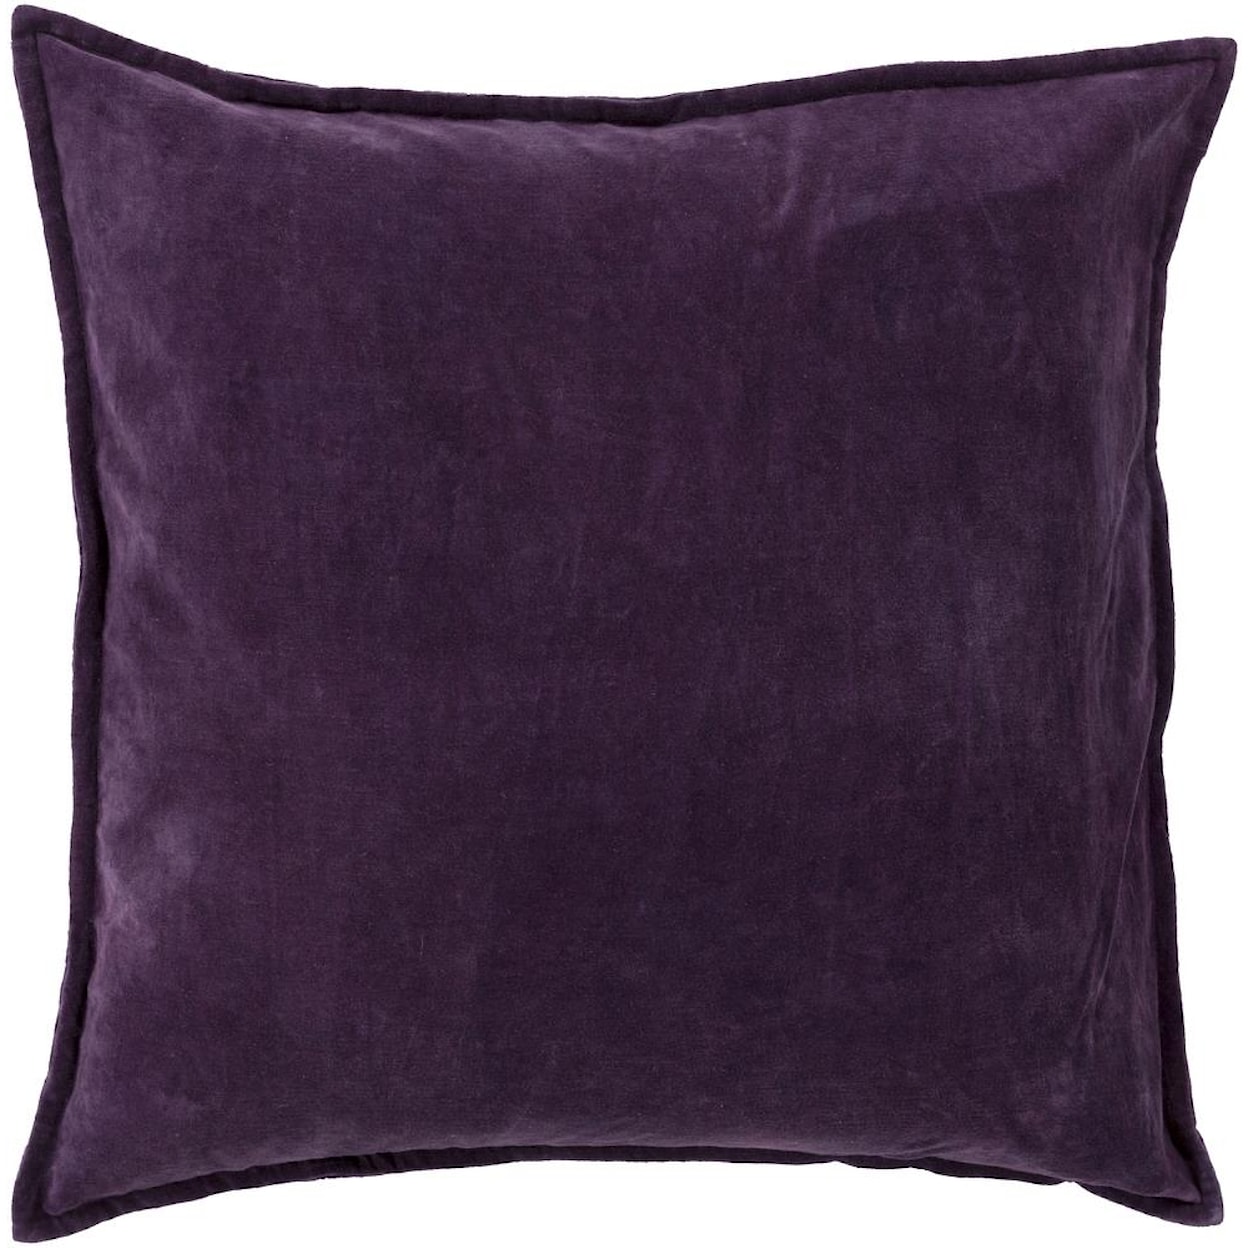 Surya Pillows 20" x 20" Cotton Velvet Pillow